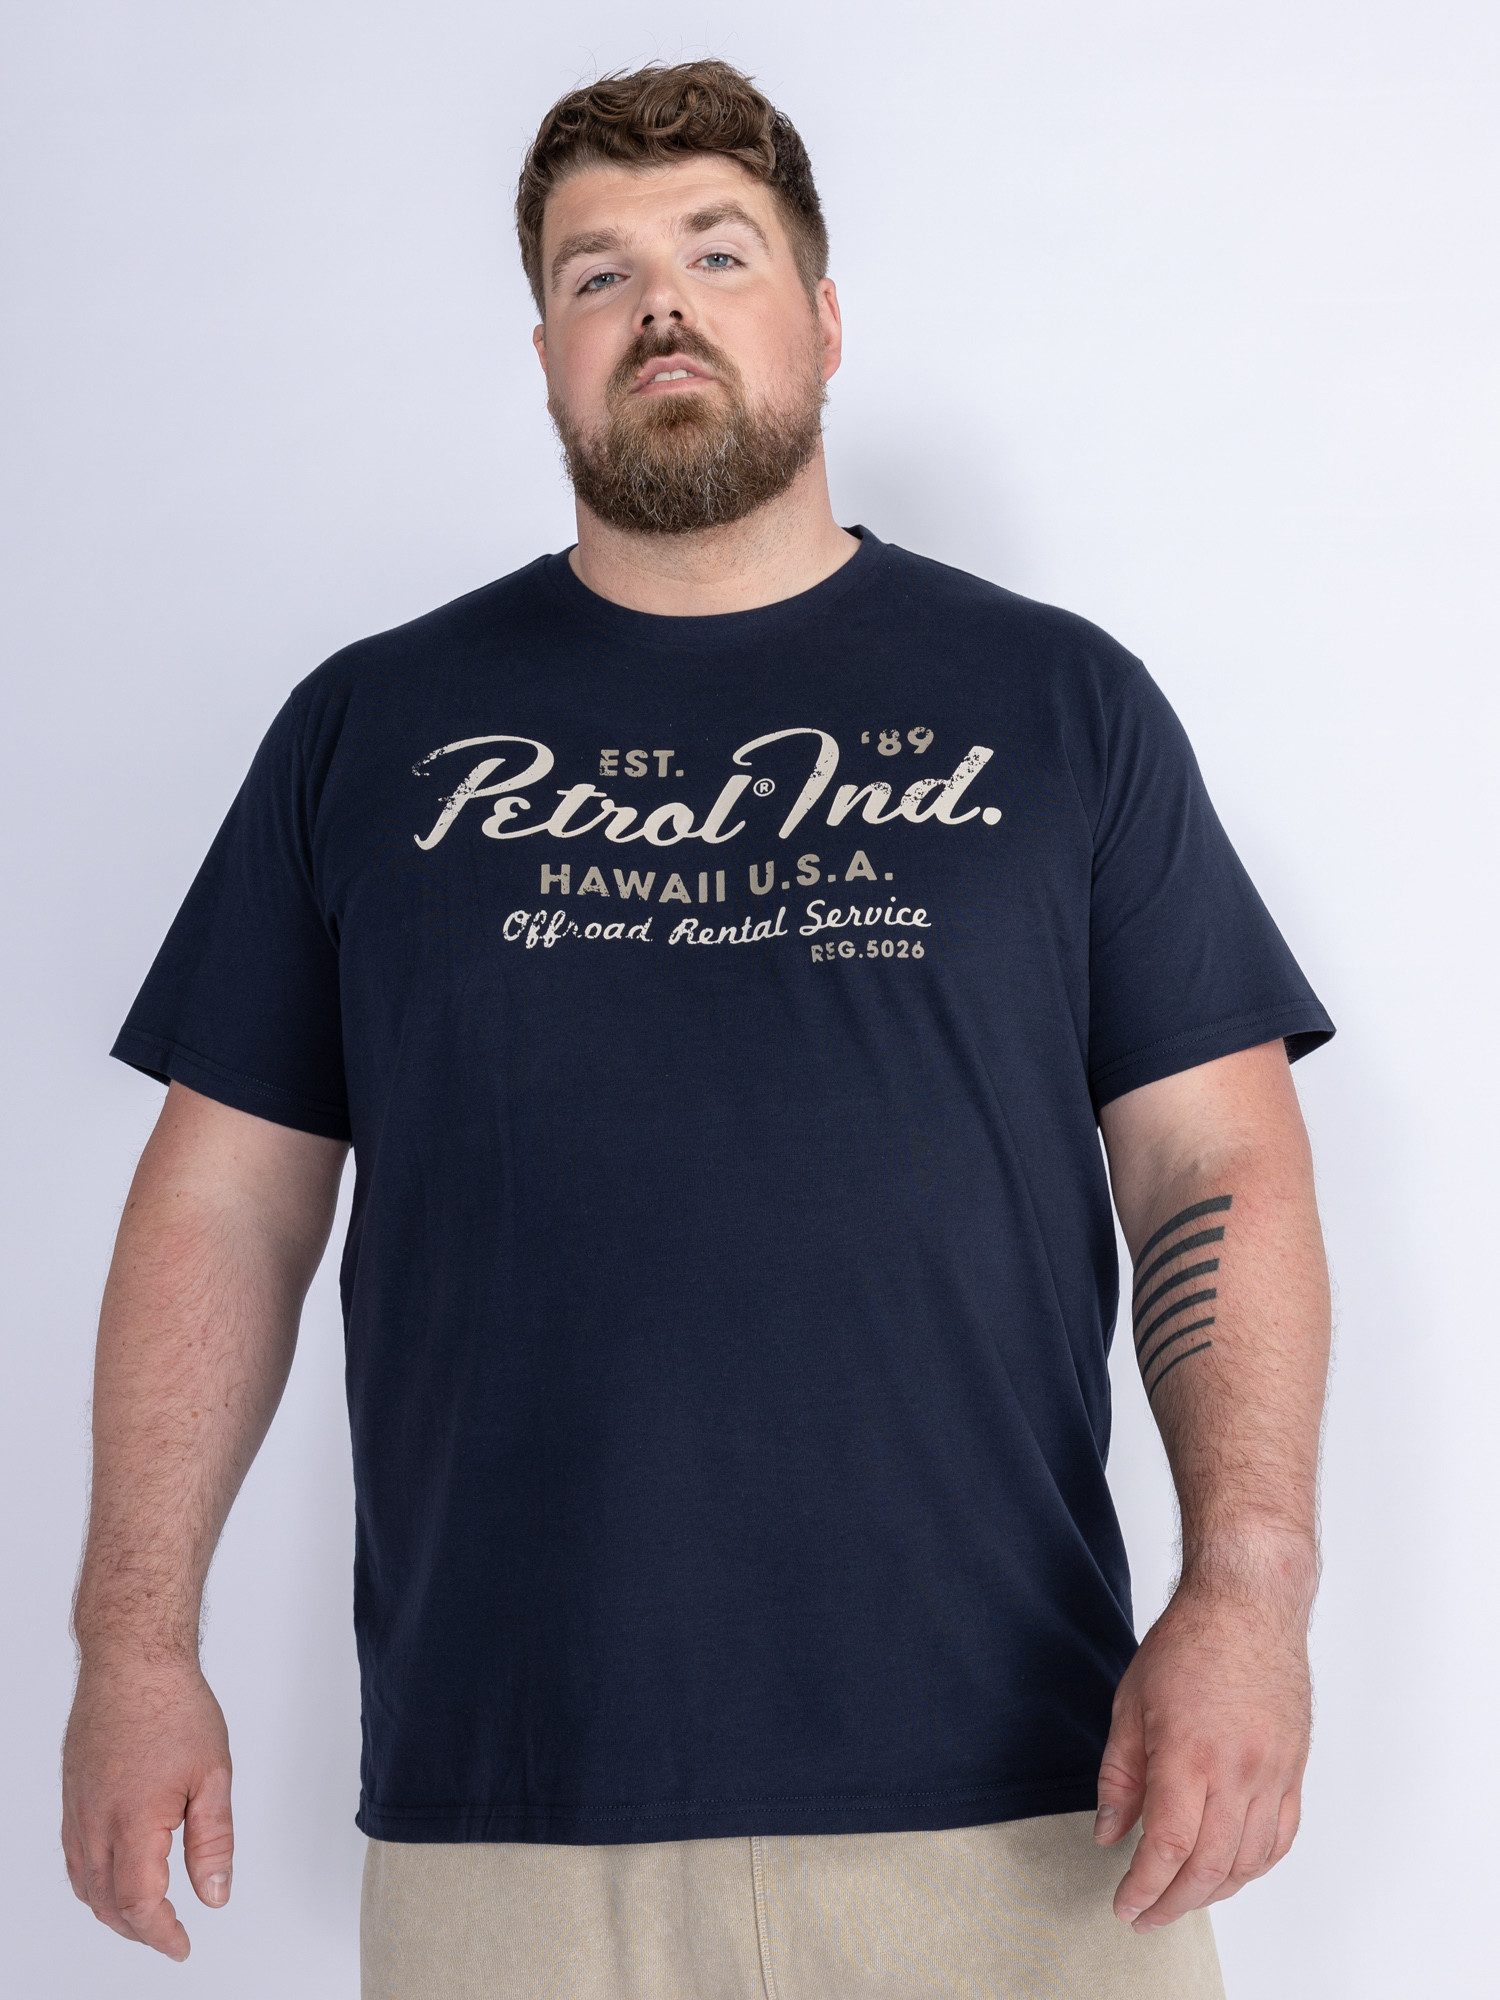 Petrol Industries T-shirt Men T-Shirt SS Classic Print